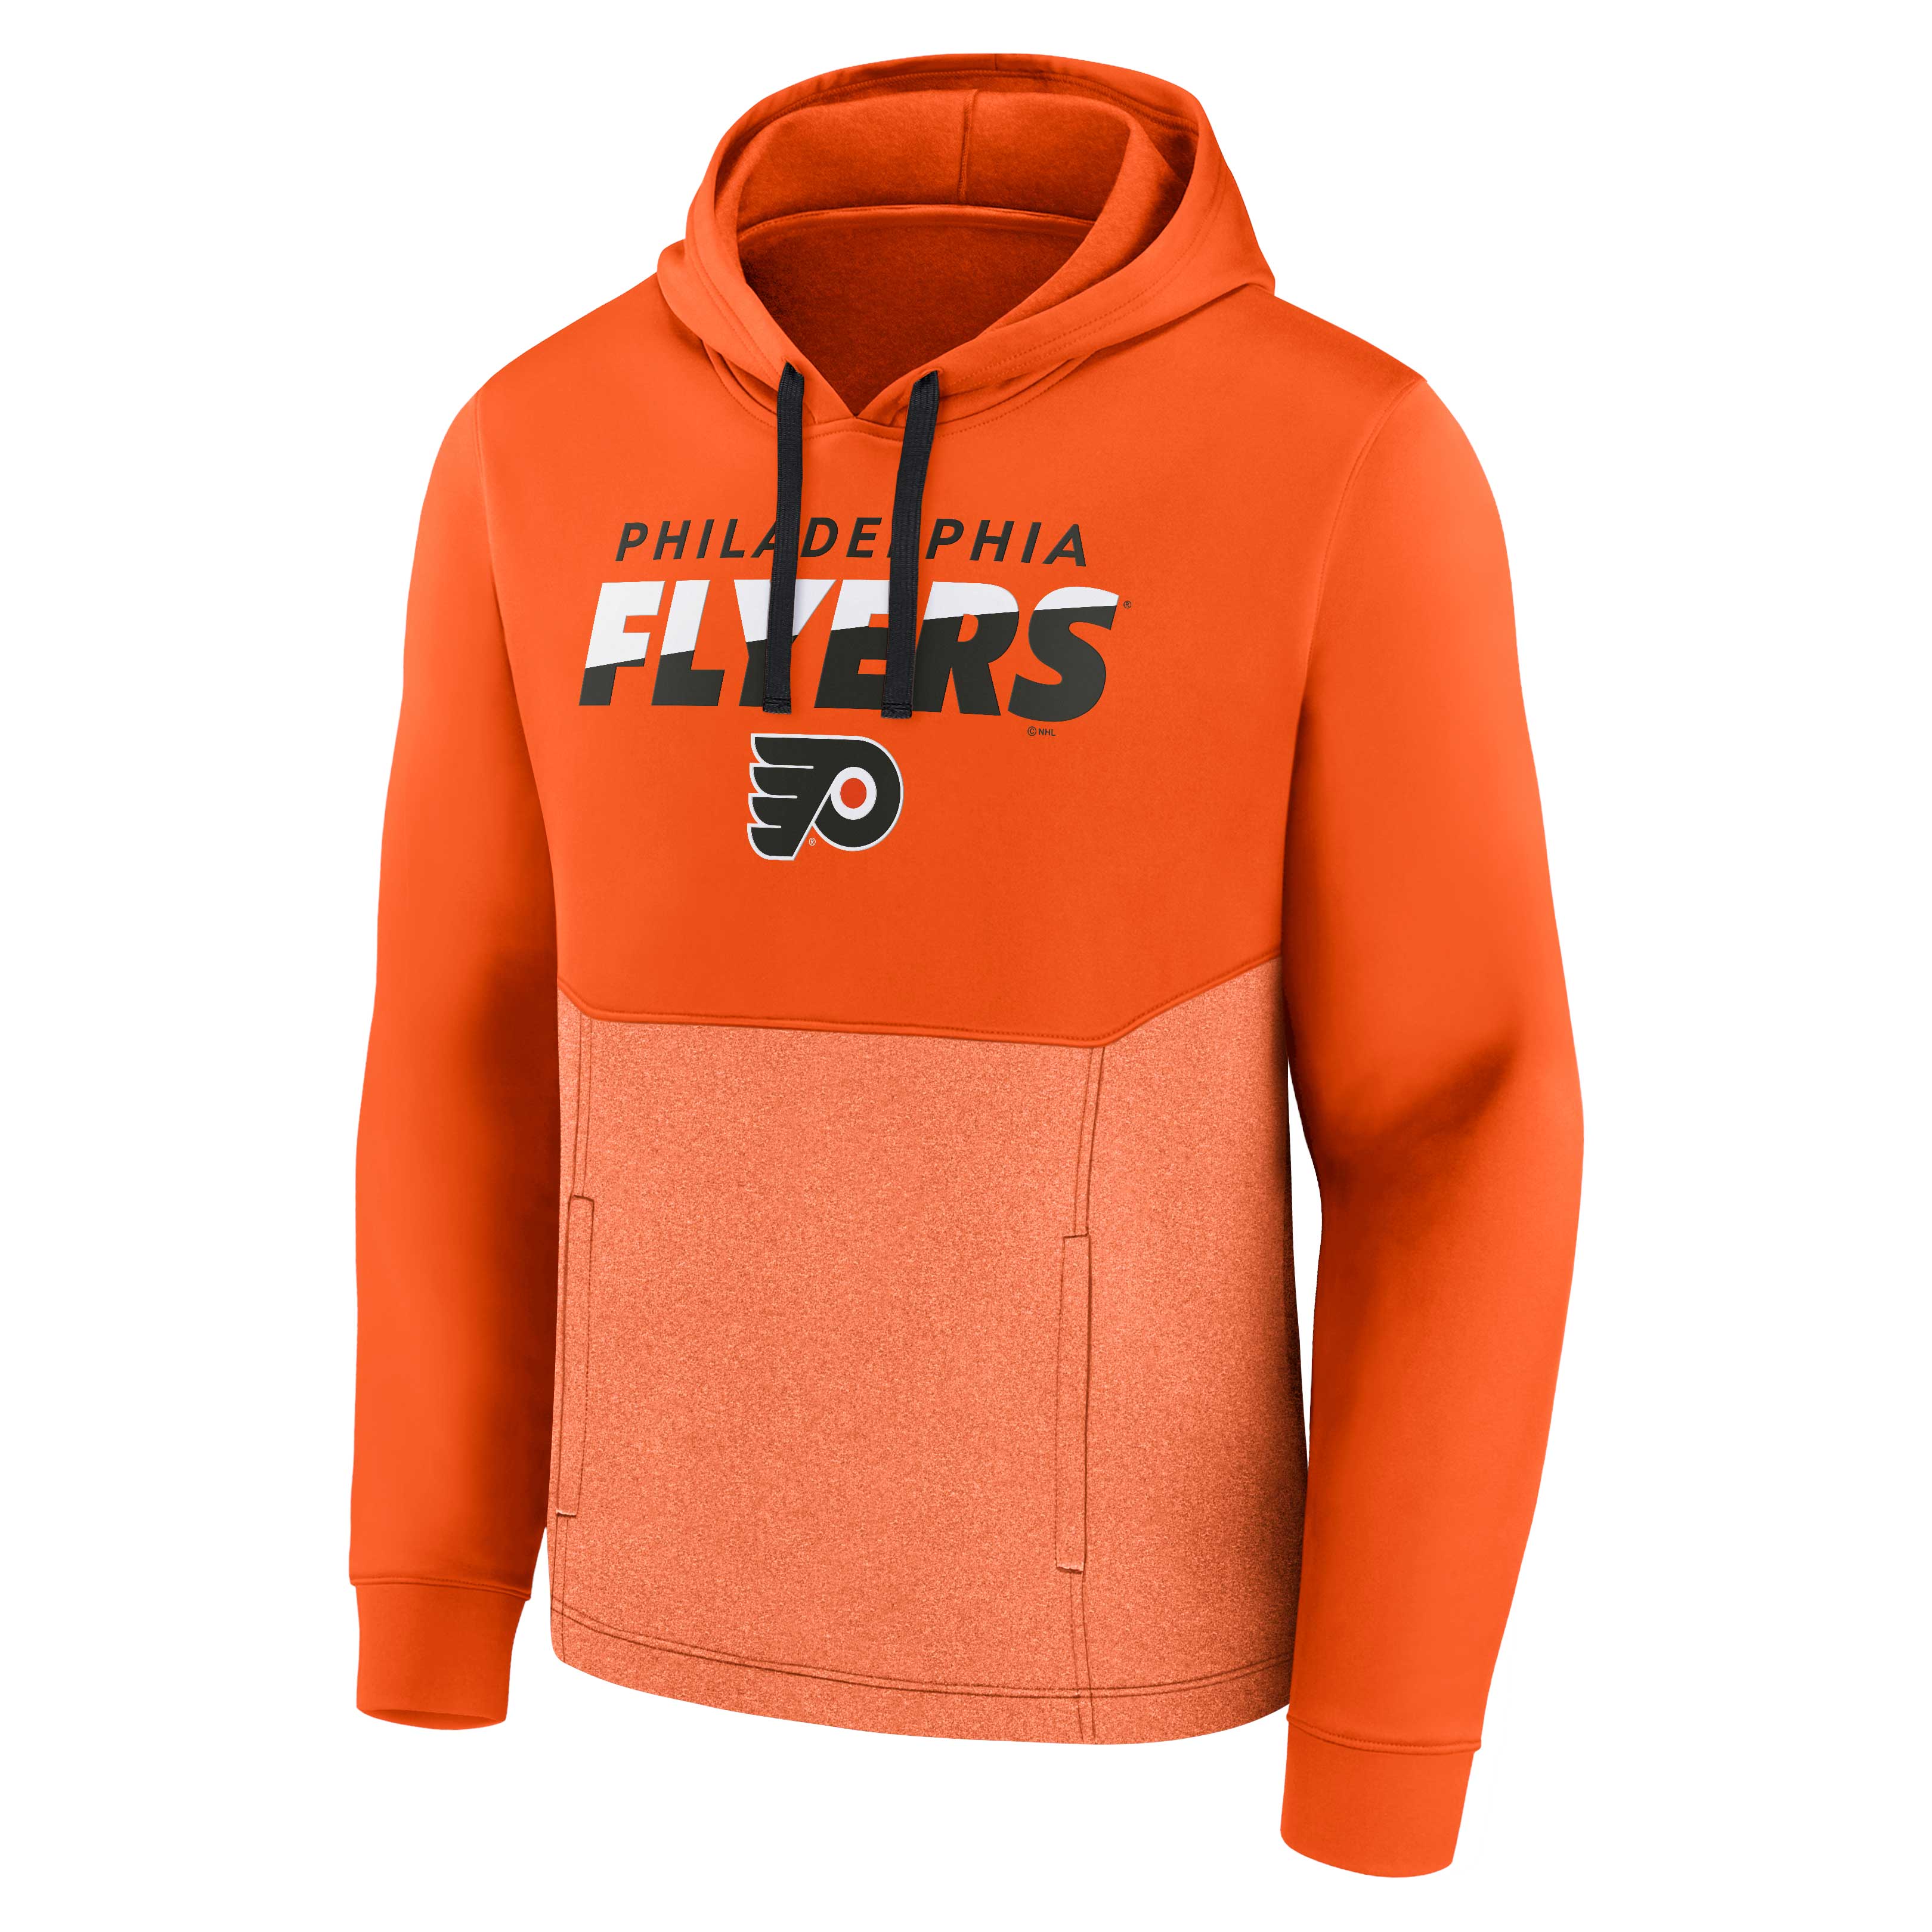 Men's Fanatics Branded Orange Philadelphia Flyers Slash Attack Pullover Hoodie - image 2 of 3